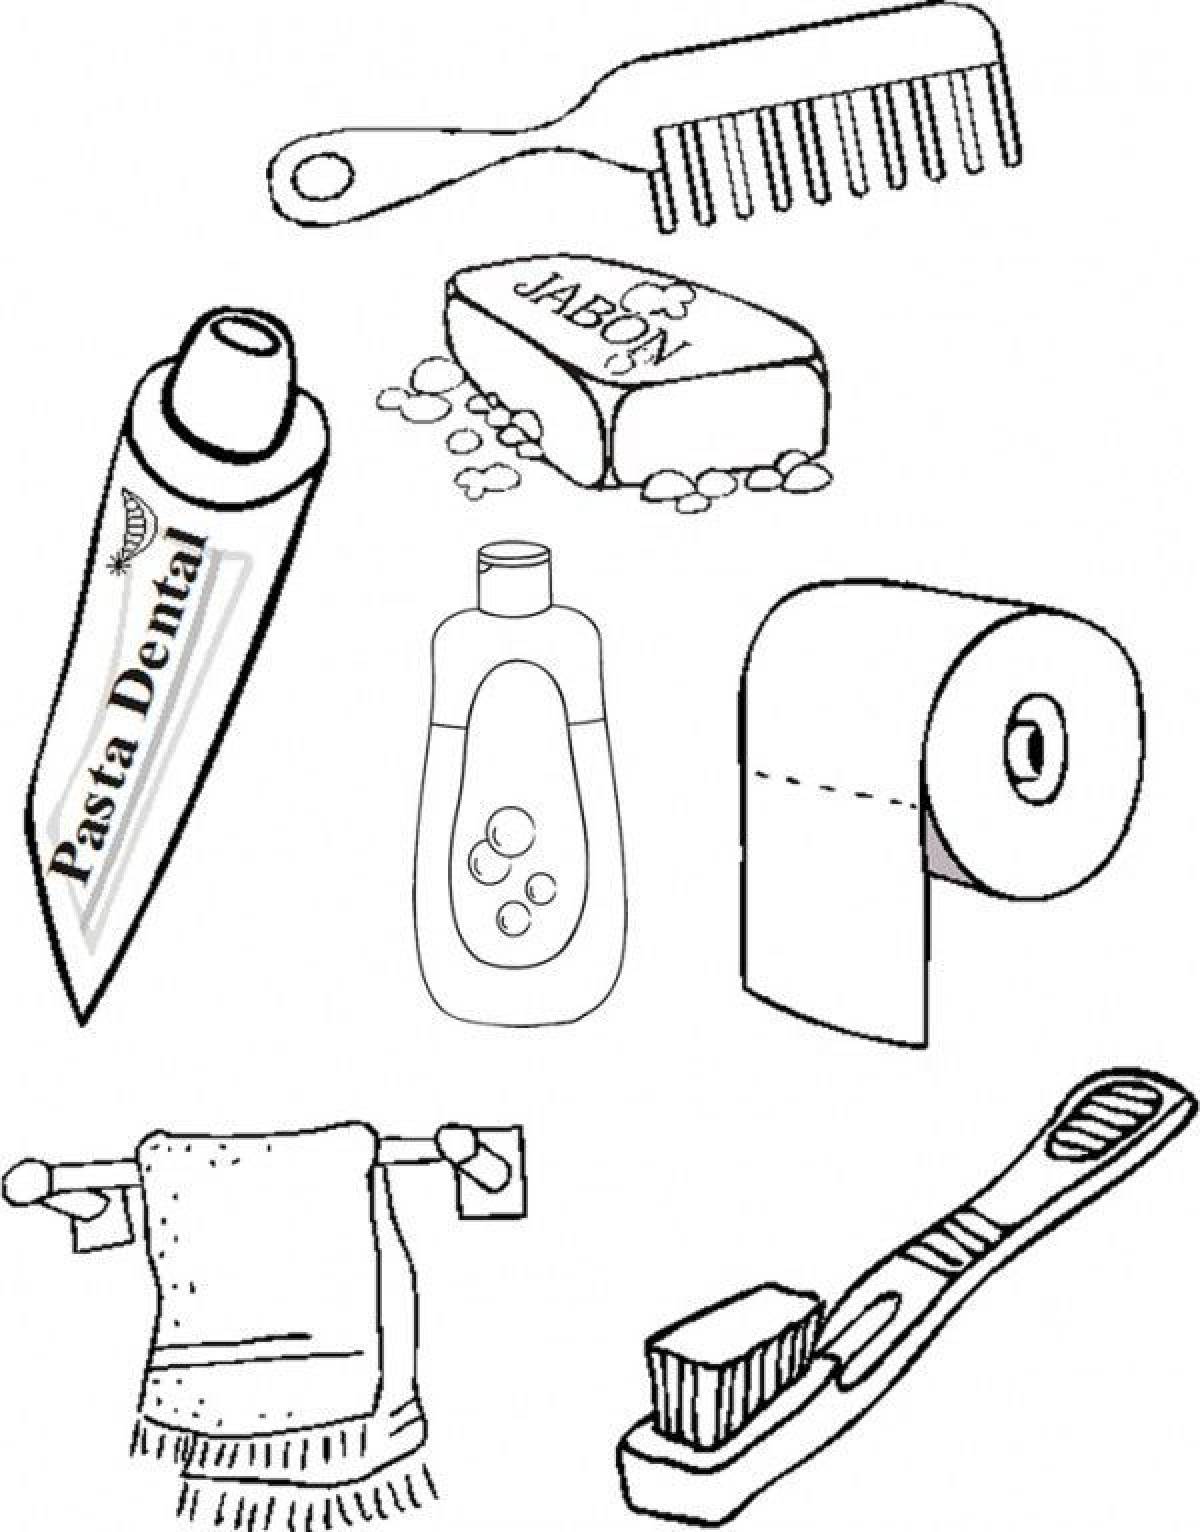 Hygiene items